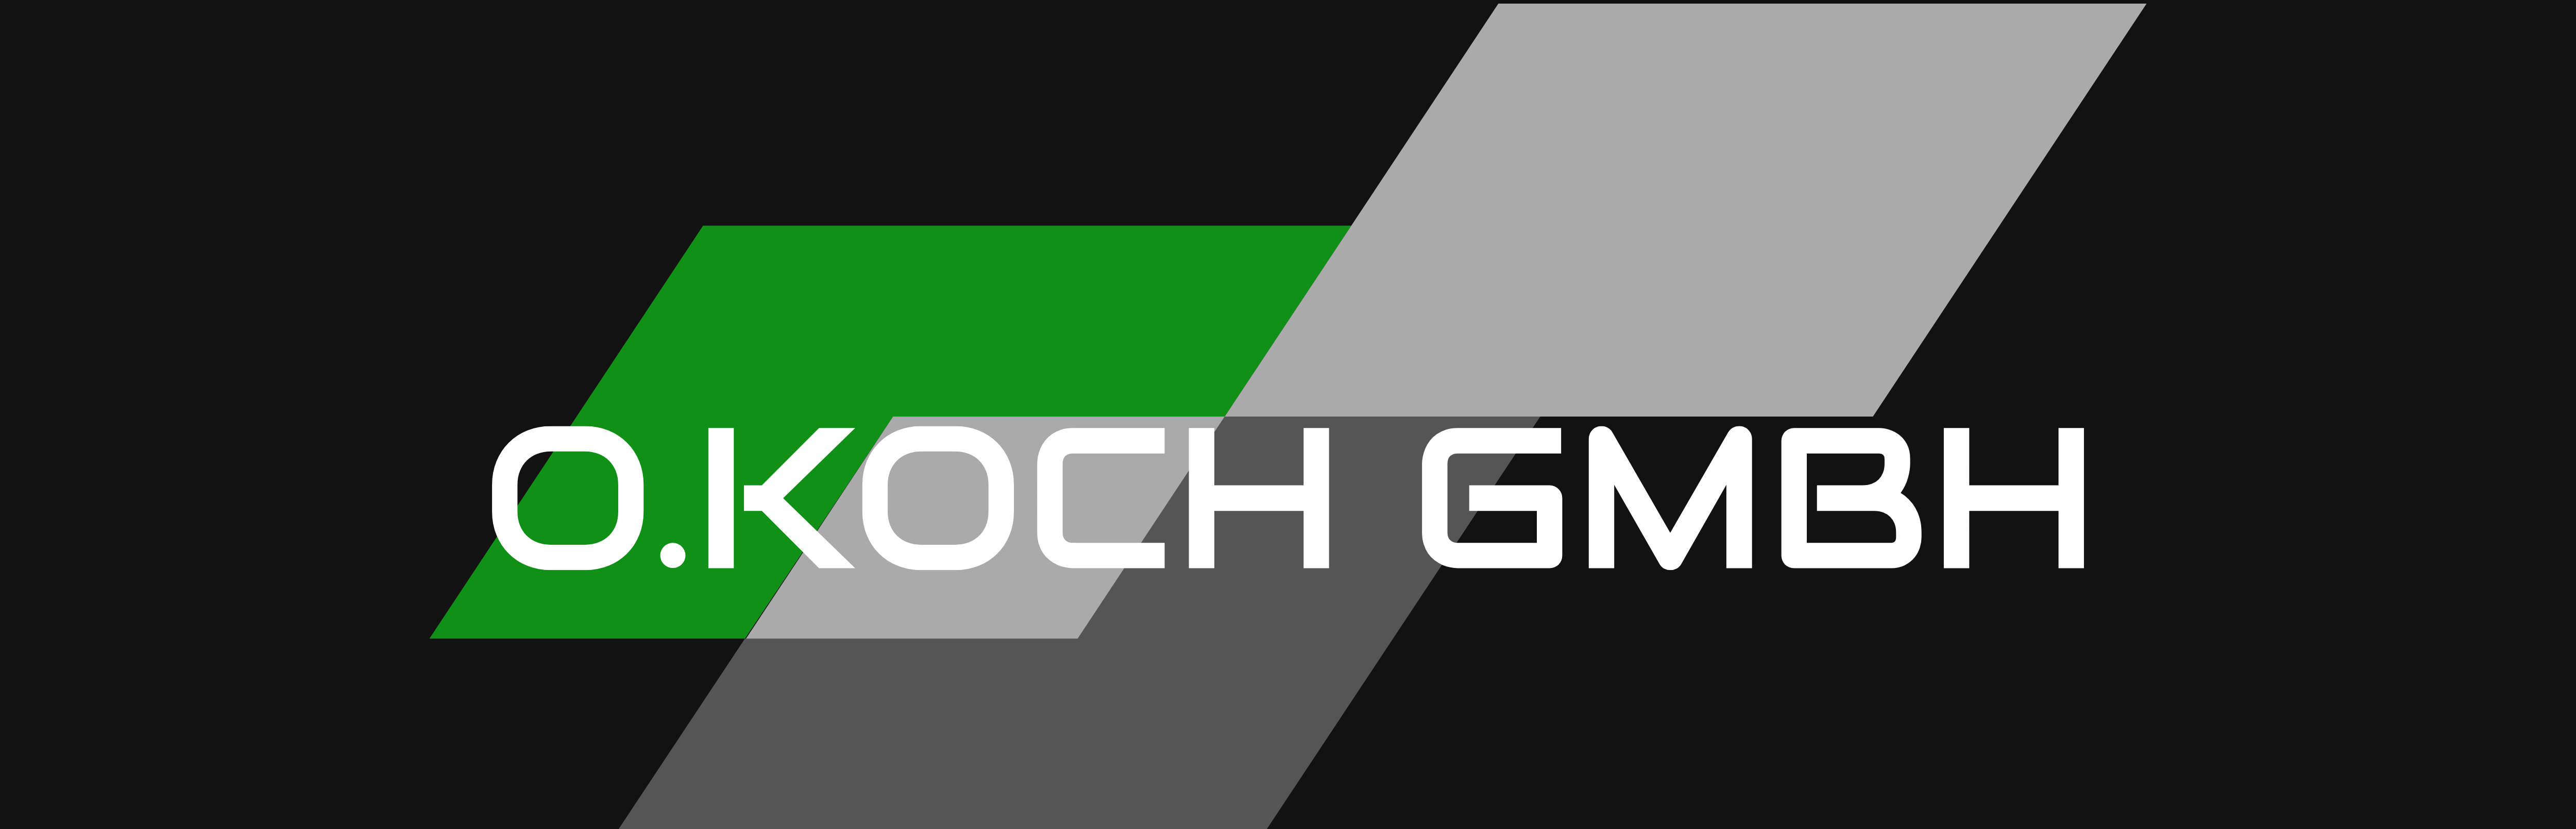 O Koch GmbH